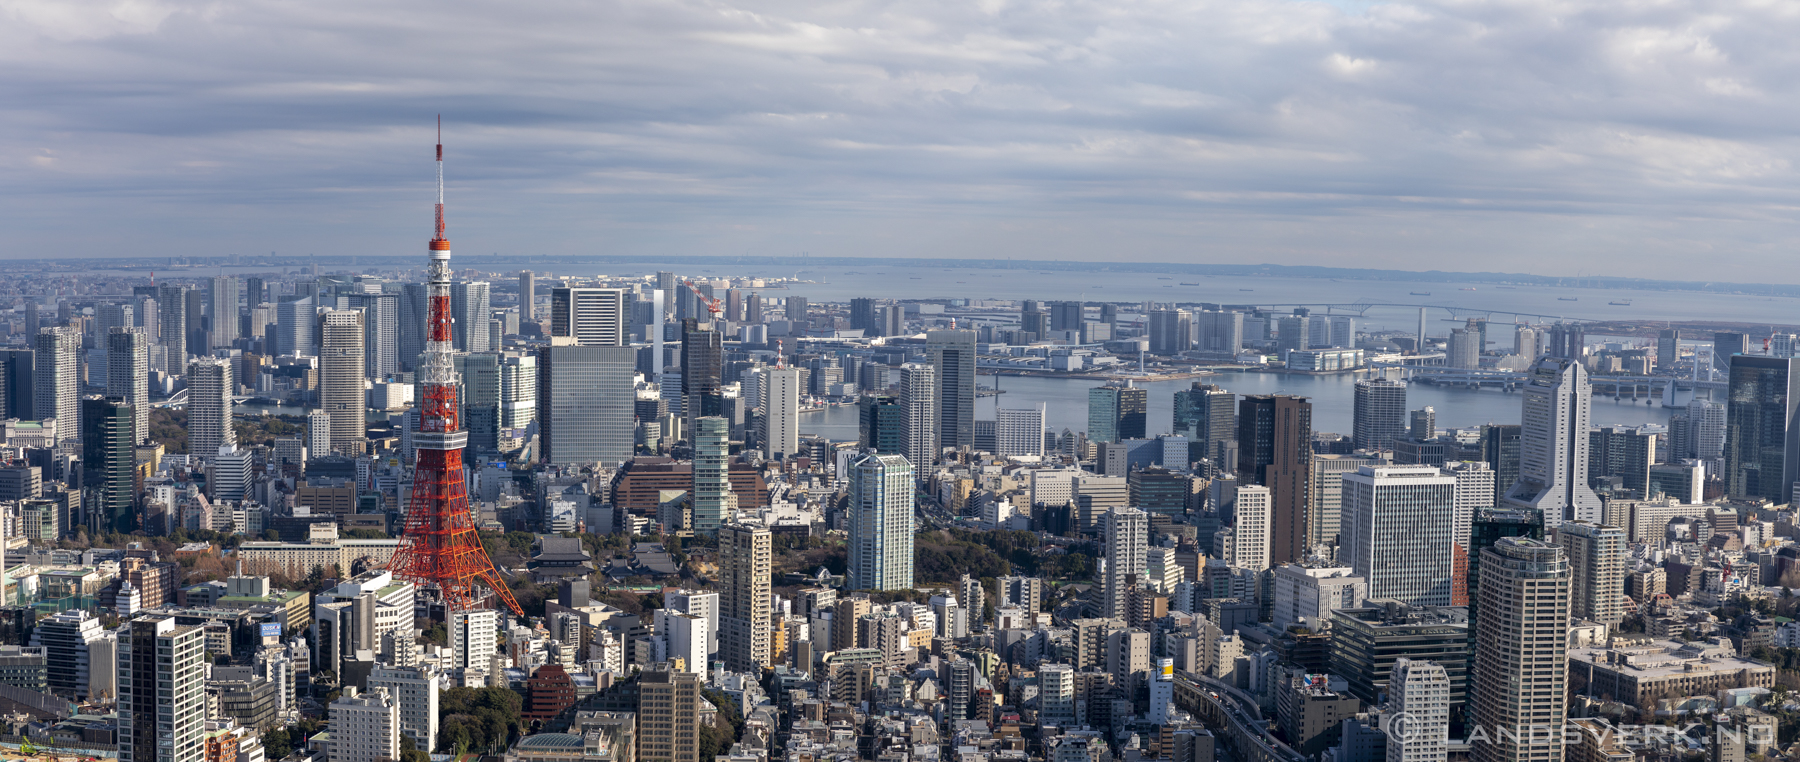 Tokyo, Japan. 

(Canon EOS 5D Mark IV / Canon EF 24-70mm f/2.8 L II USM)